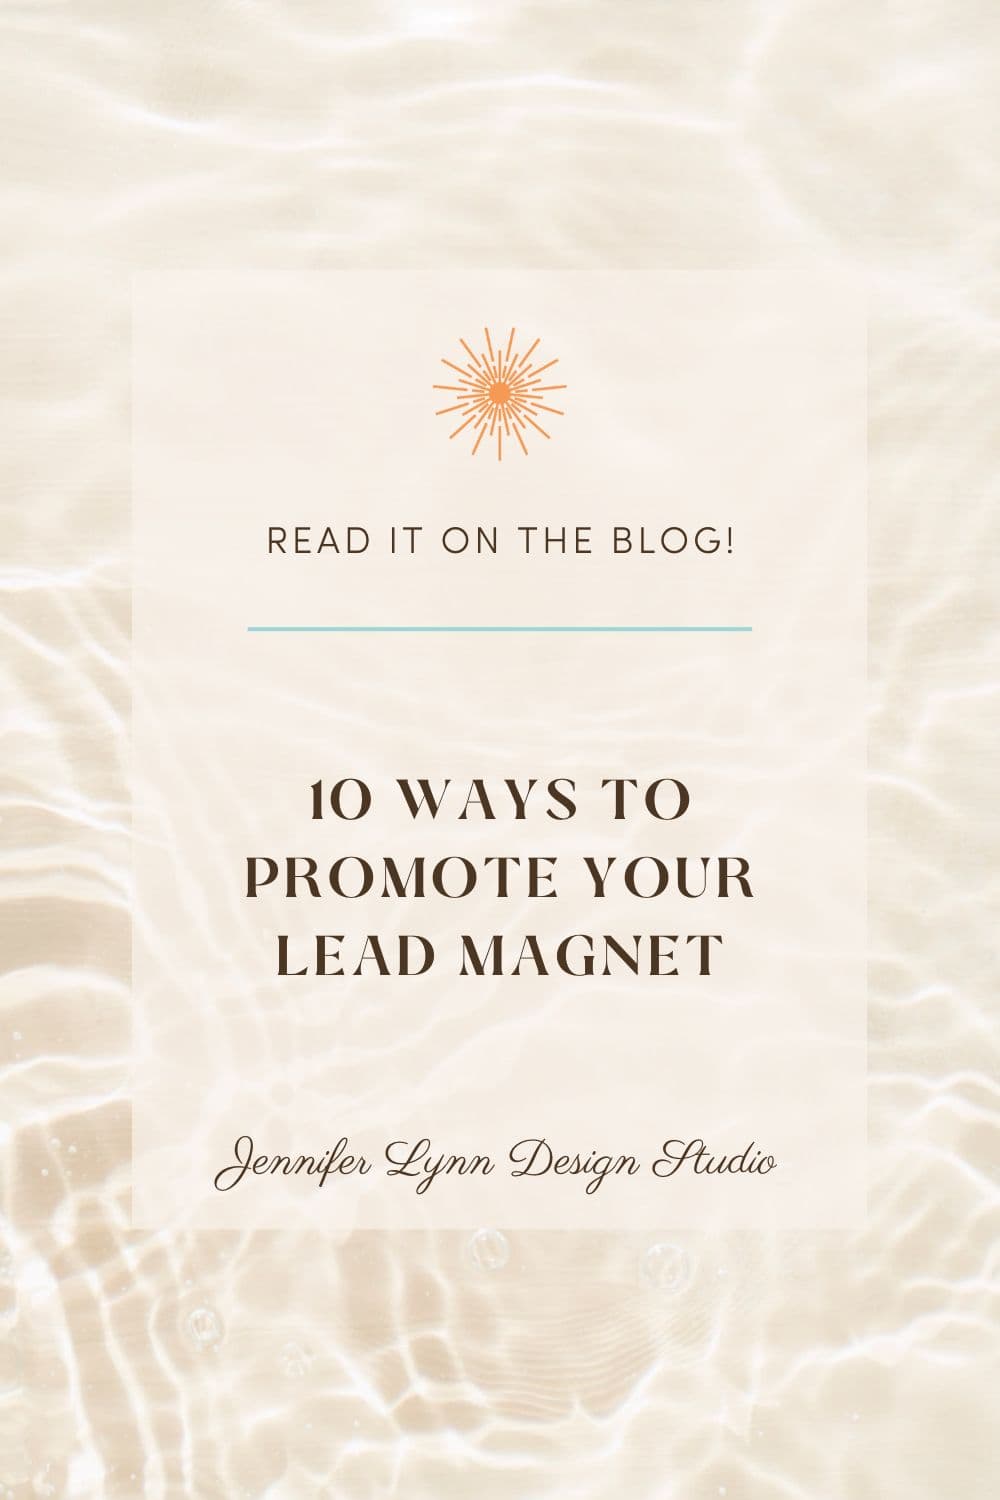 10 Ways to Promote Your Lead Magnet by Jennifer Lynn Design Studio